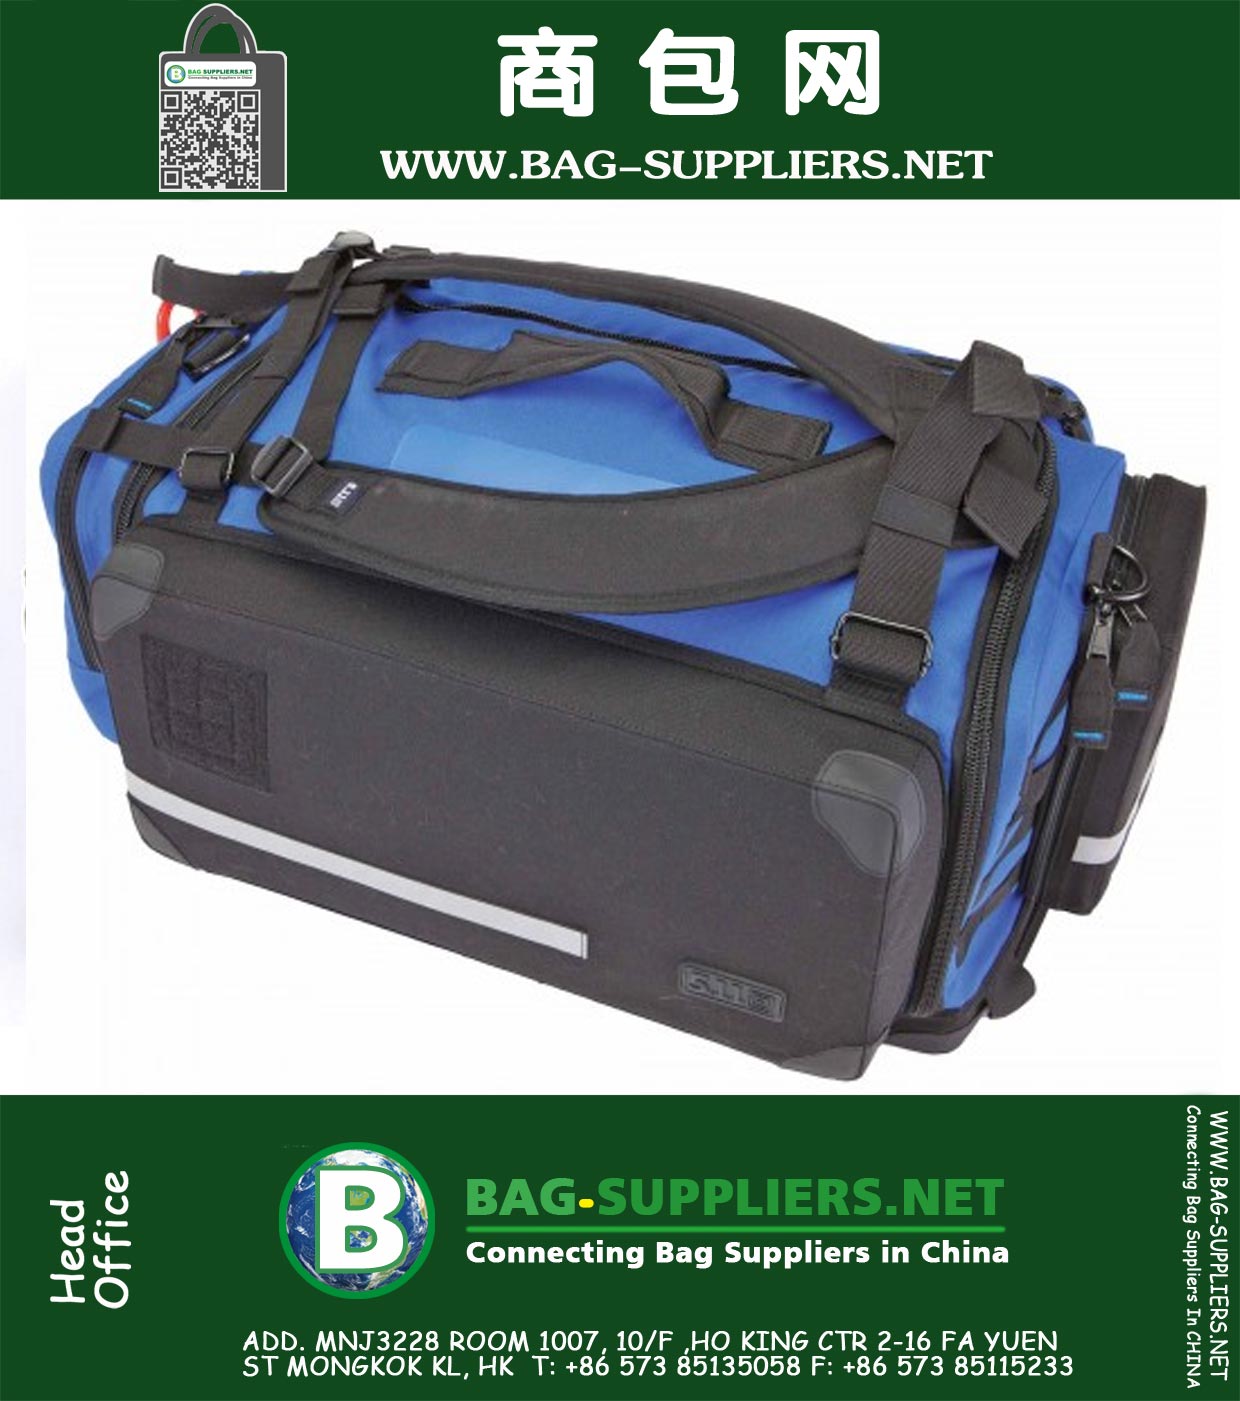 Lightweight, highly functional first responder bag